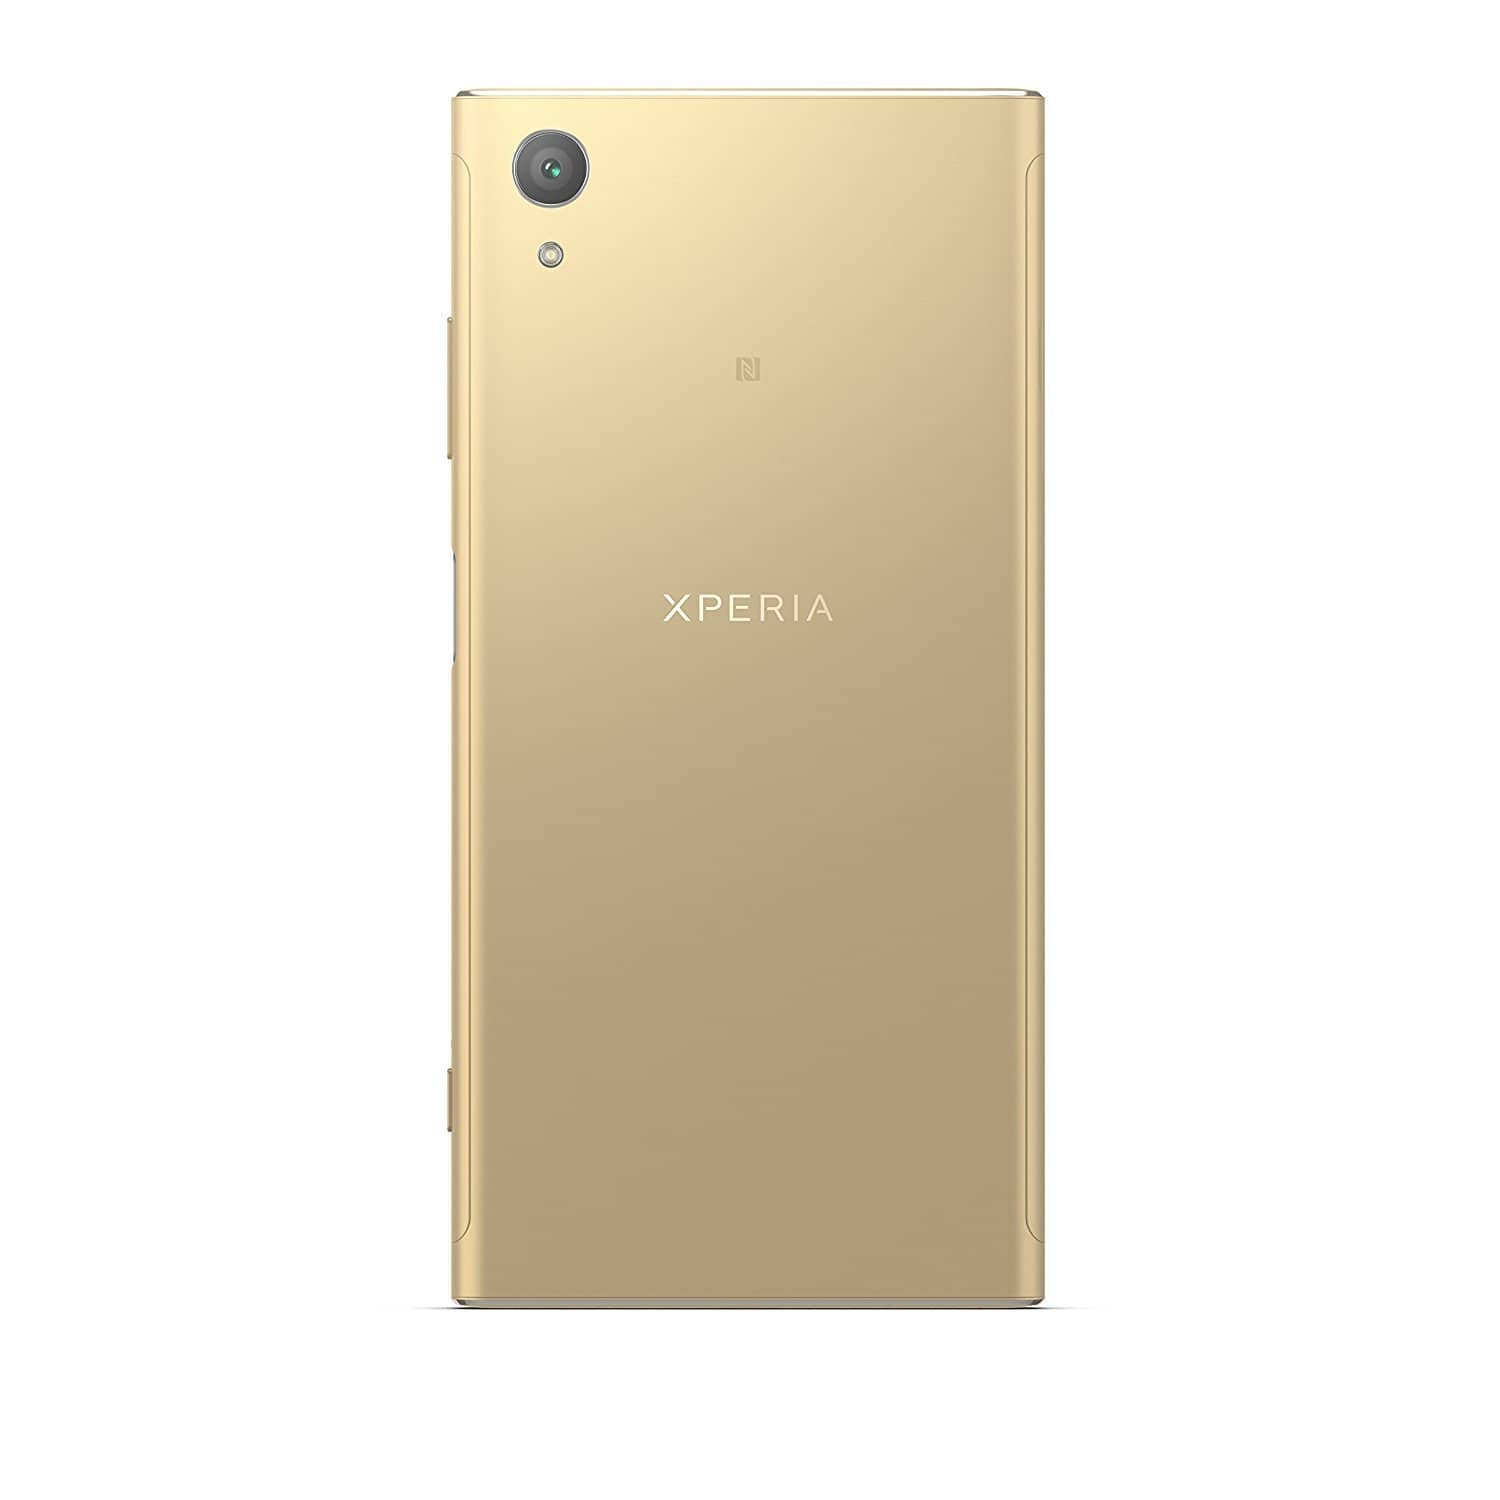 Sony G3423 (Gold) Xperia XA1 Plus - Unlocked